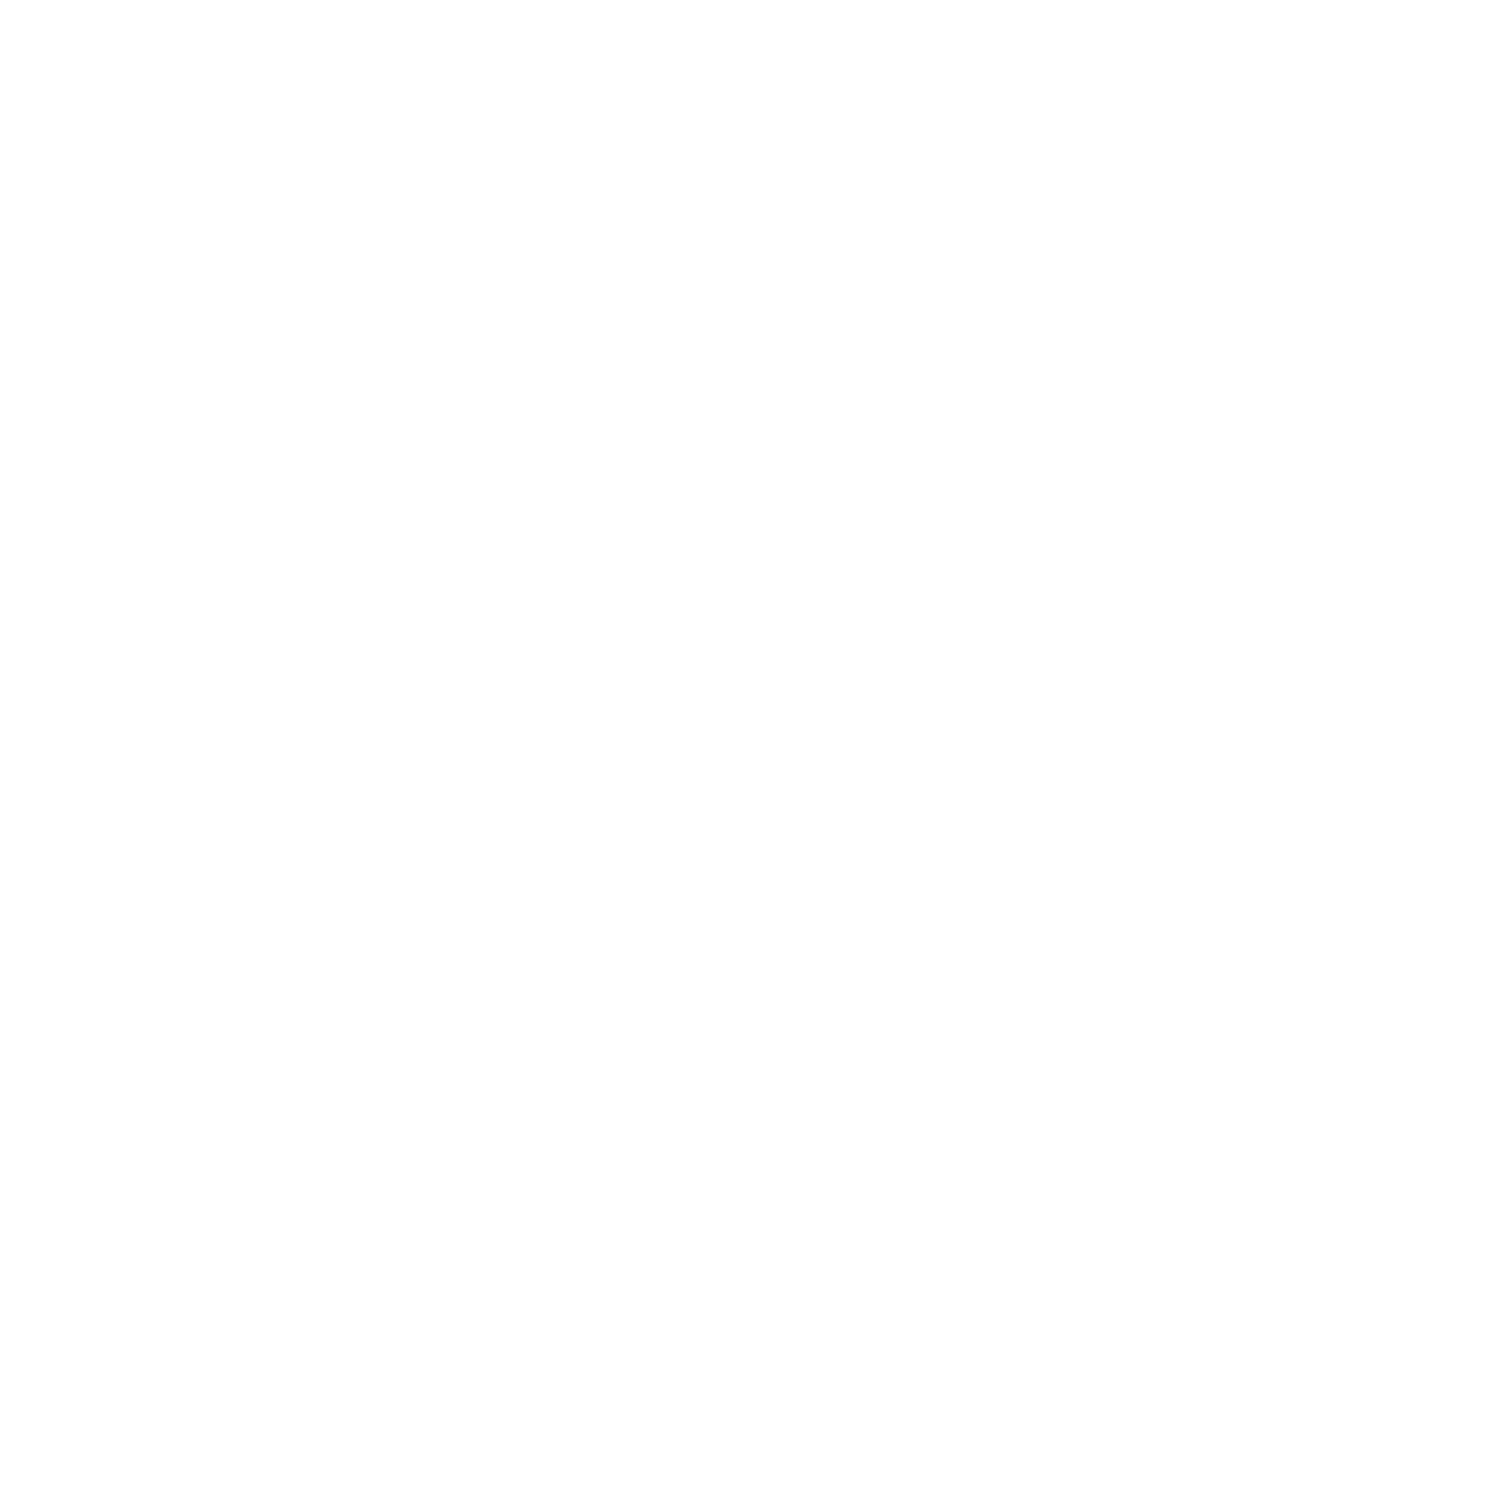 Caan Rose Estates Ltd - Slough : Letting agents in Hayes Greater London Hillingdon